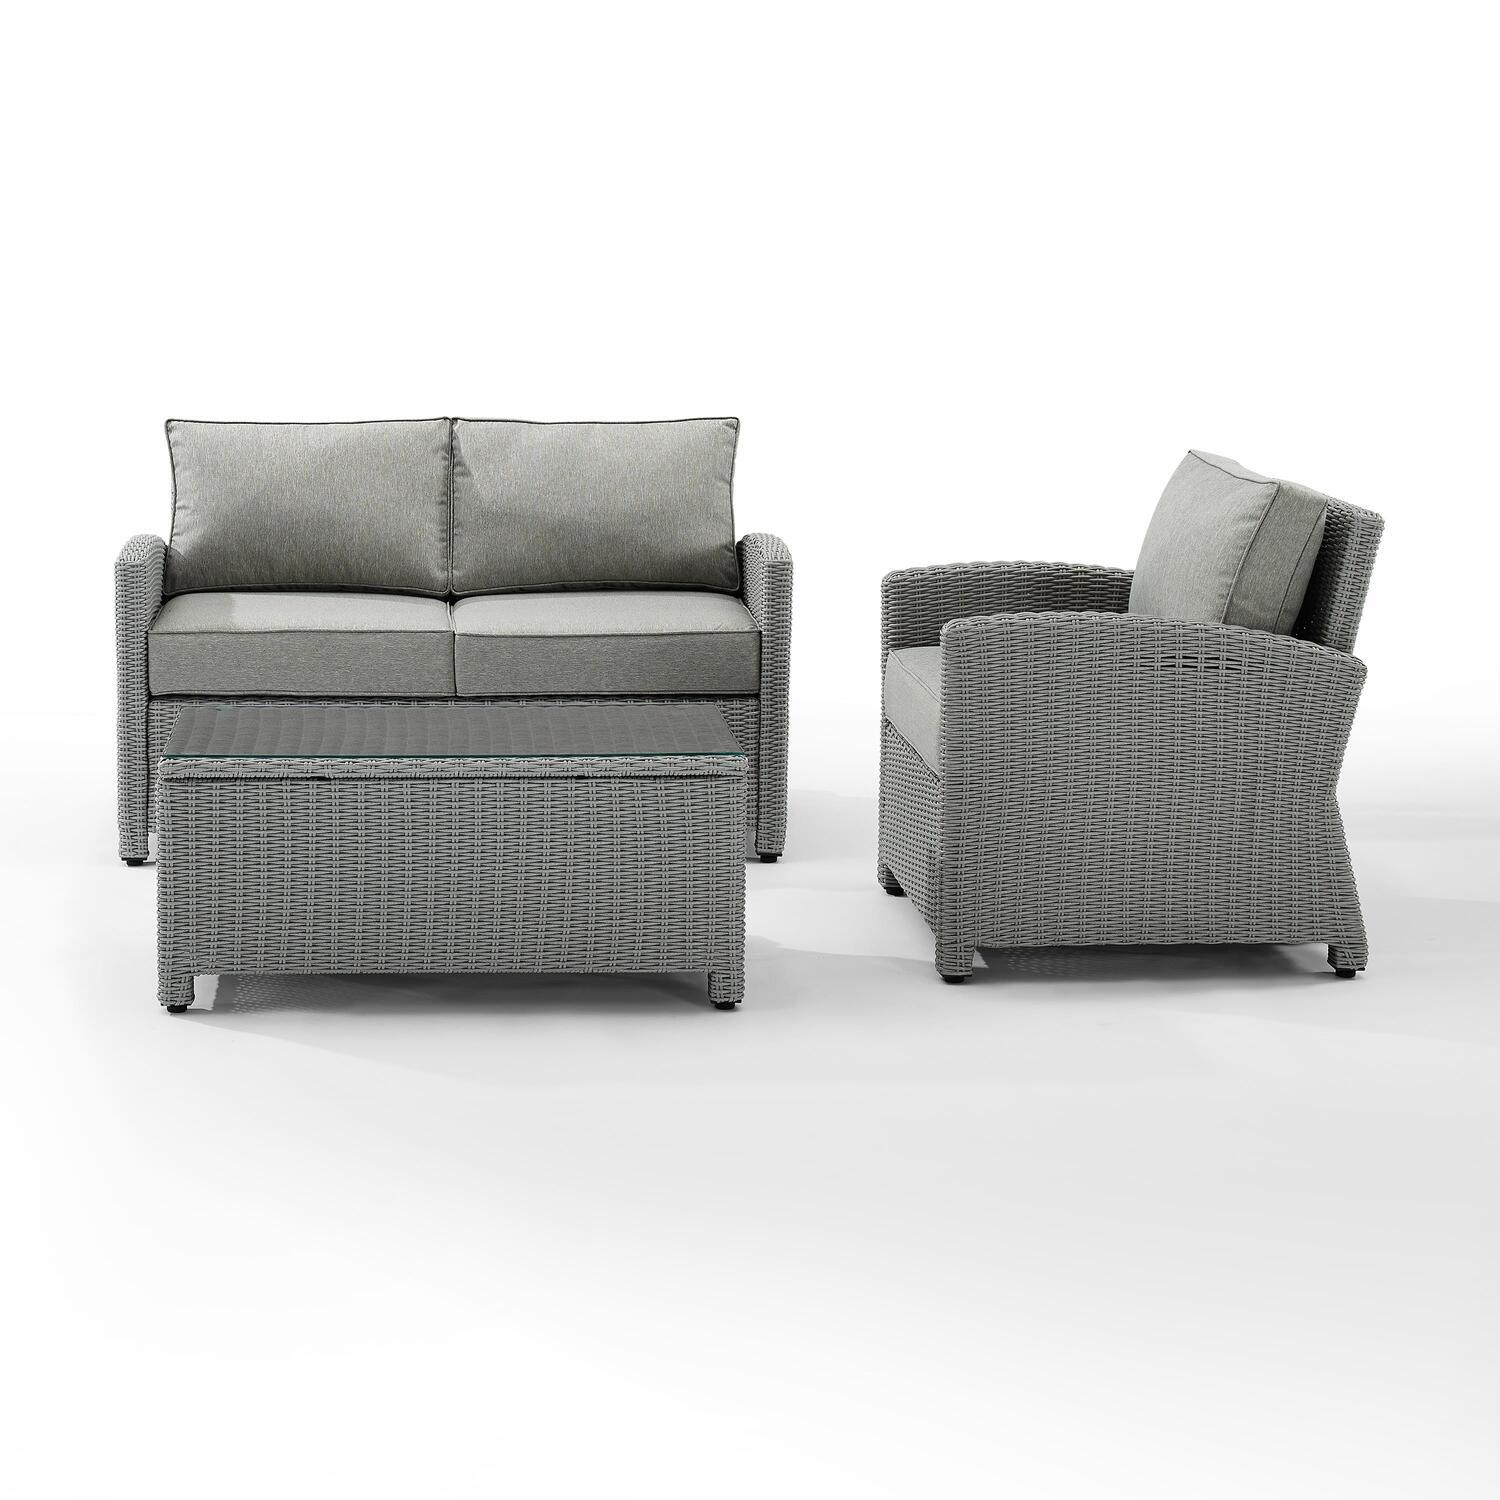 Crosley Bradenton 3 Piece Wicker Patio Sofa Set in Gray - image 1 of 7